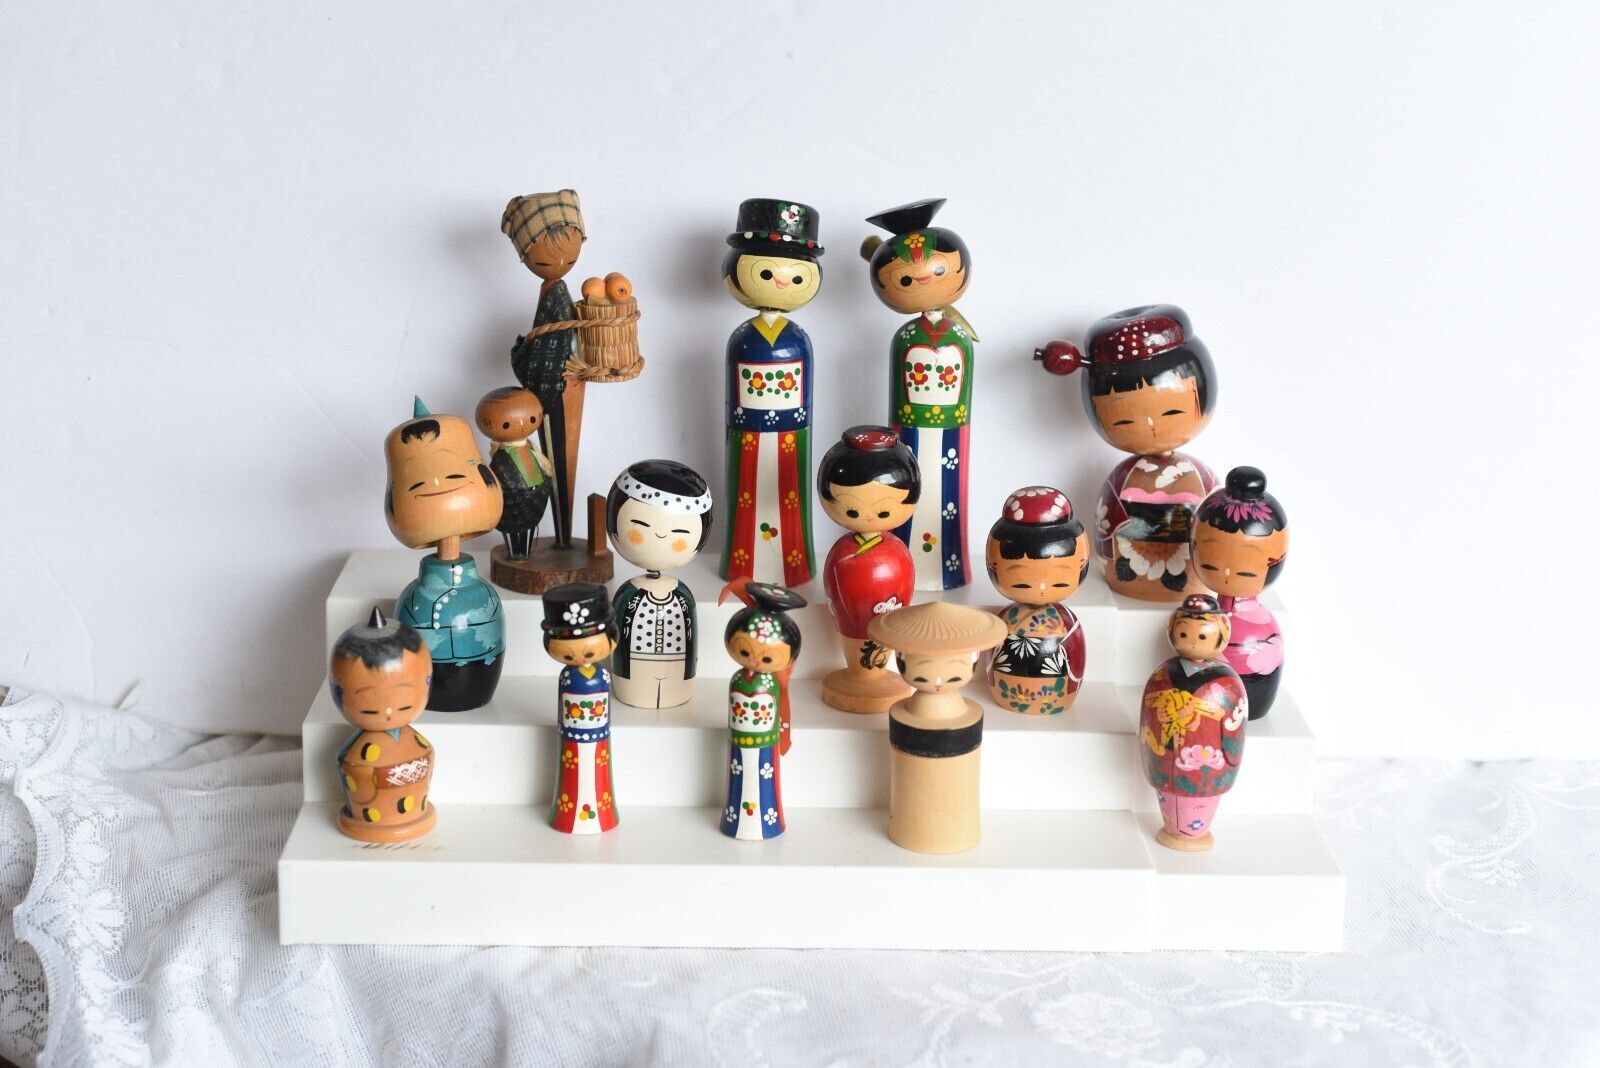 Large Lot of 14 Japan Kokeshii Wooden Bobble Head Doll Figures (M)